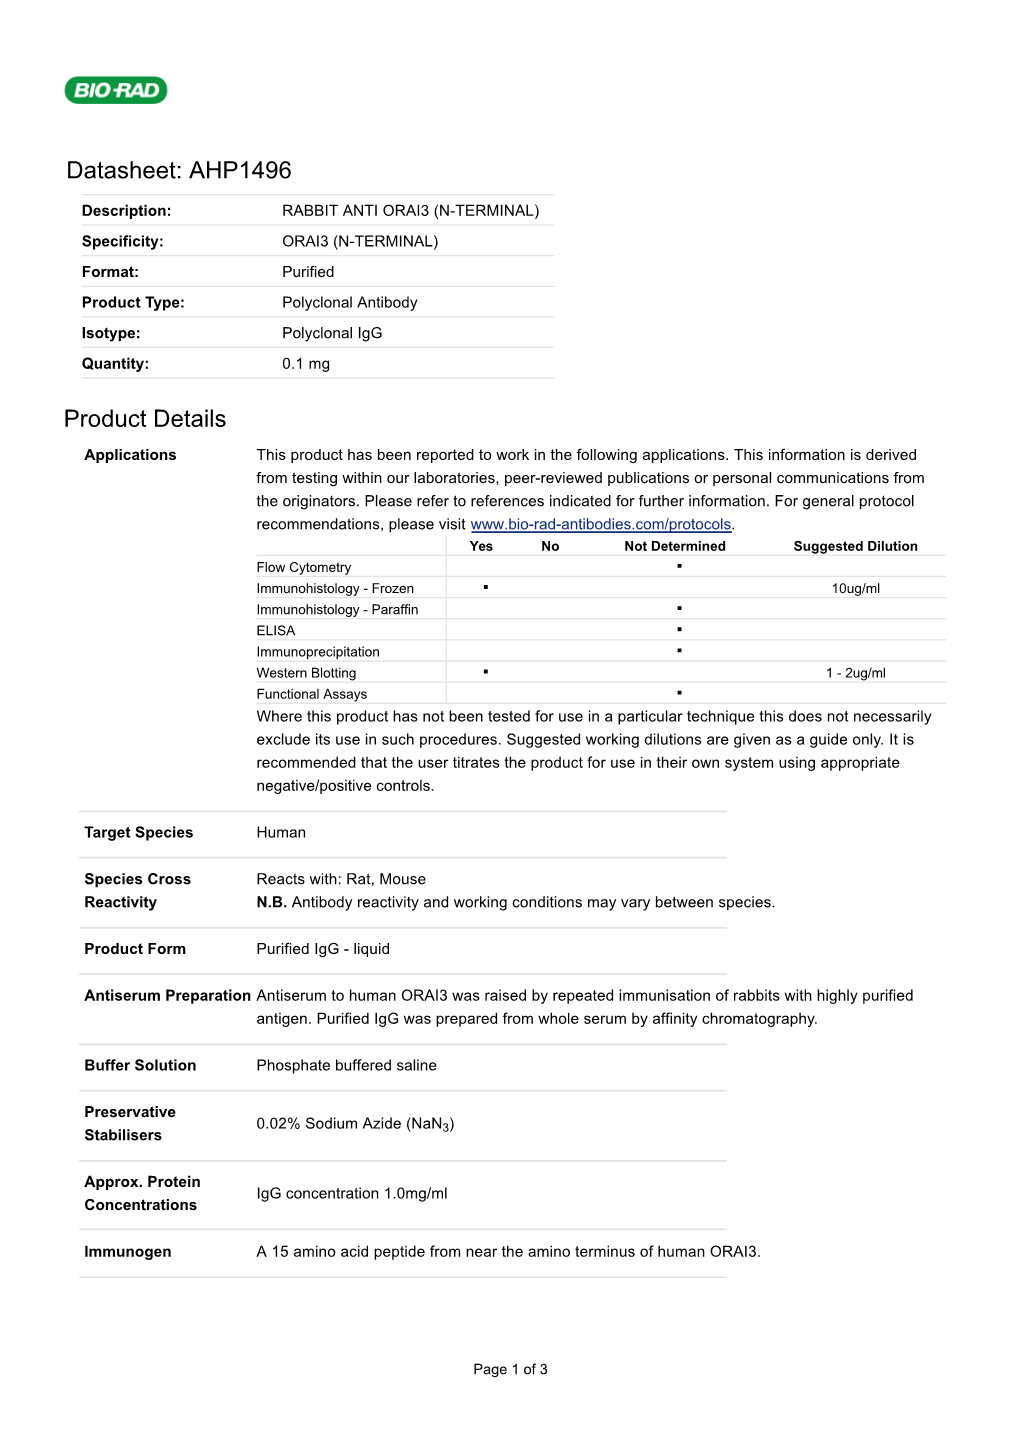 Datasheet: AHP1496 Product Details